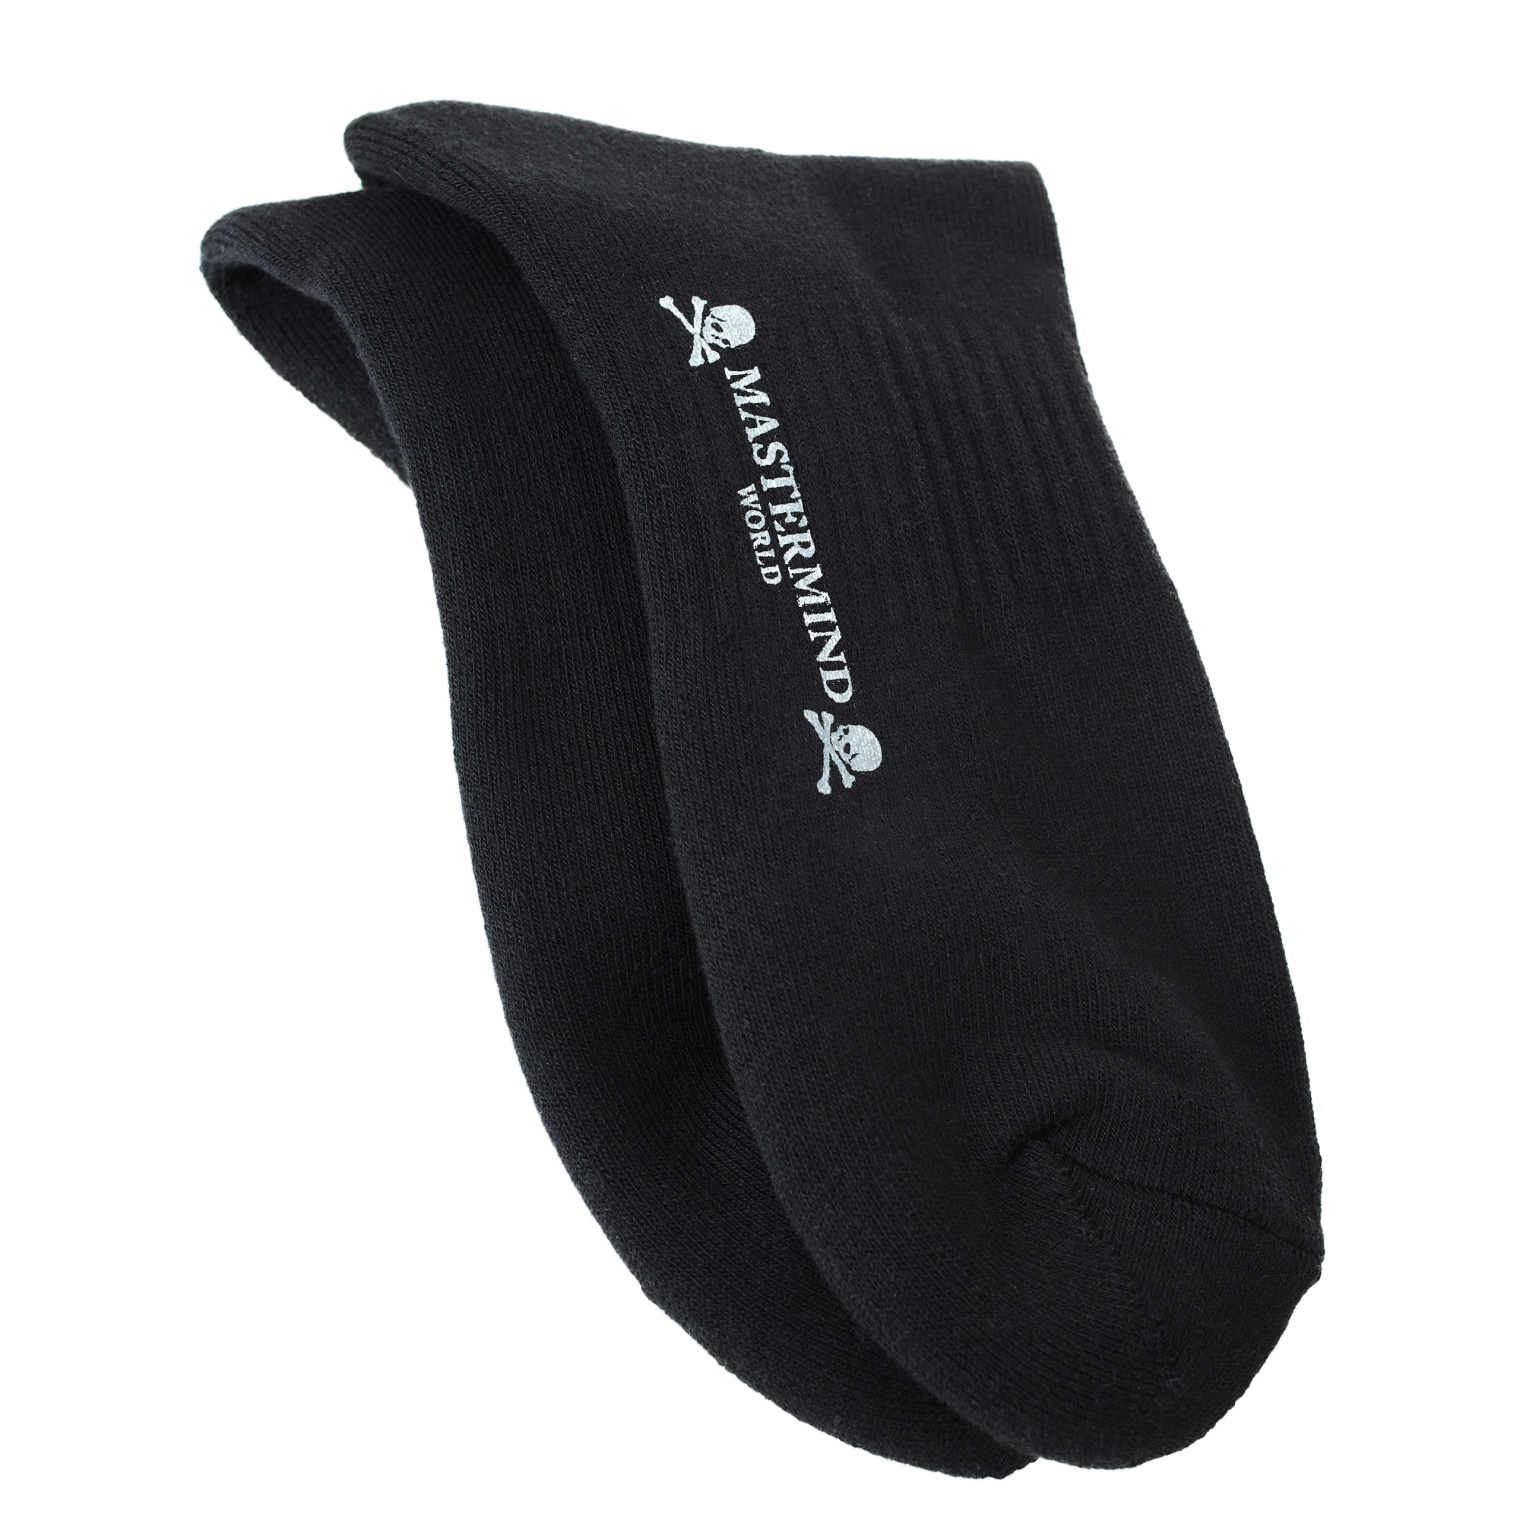 Mastermind WORLD Black logo socks